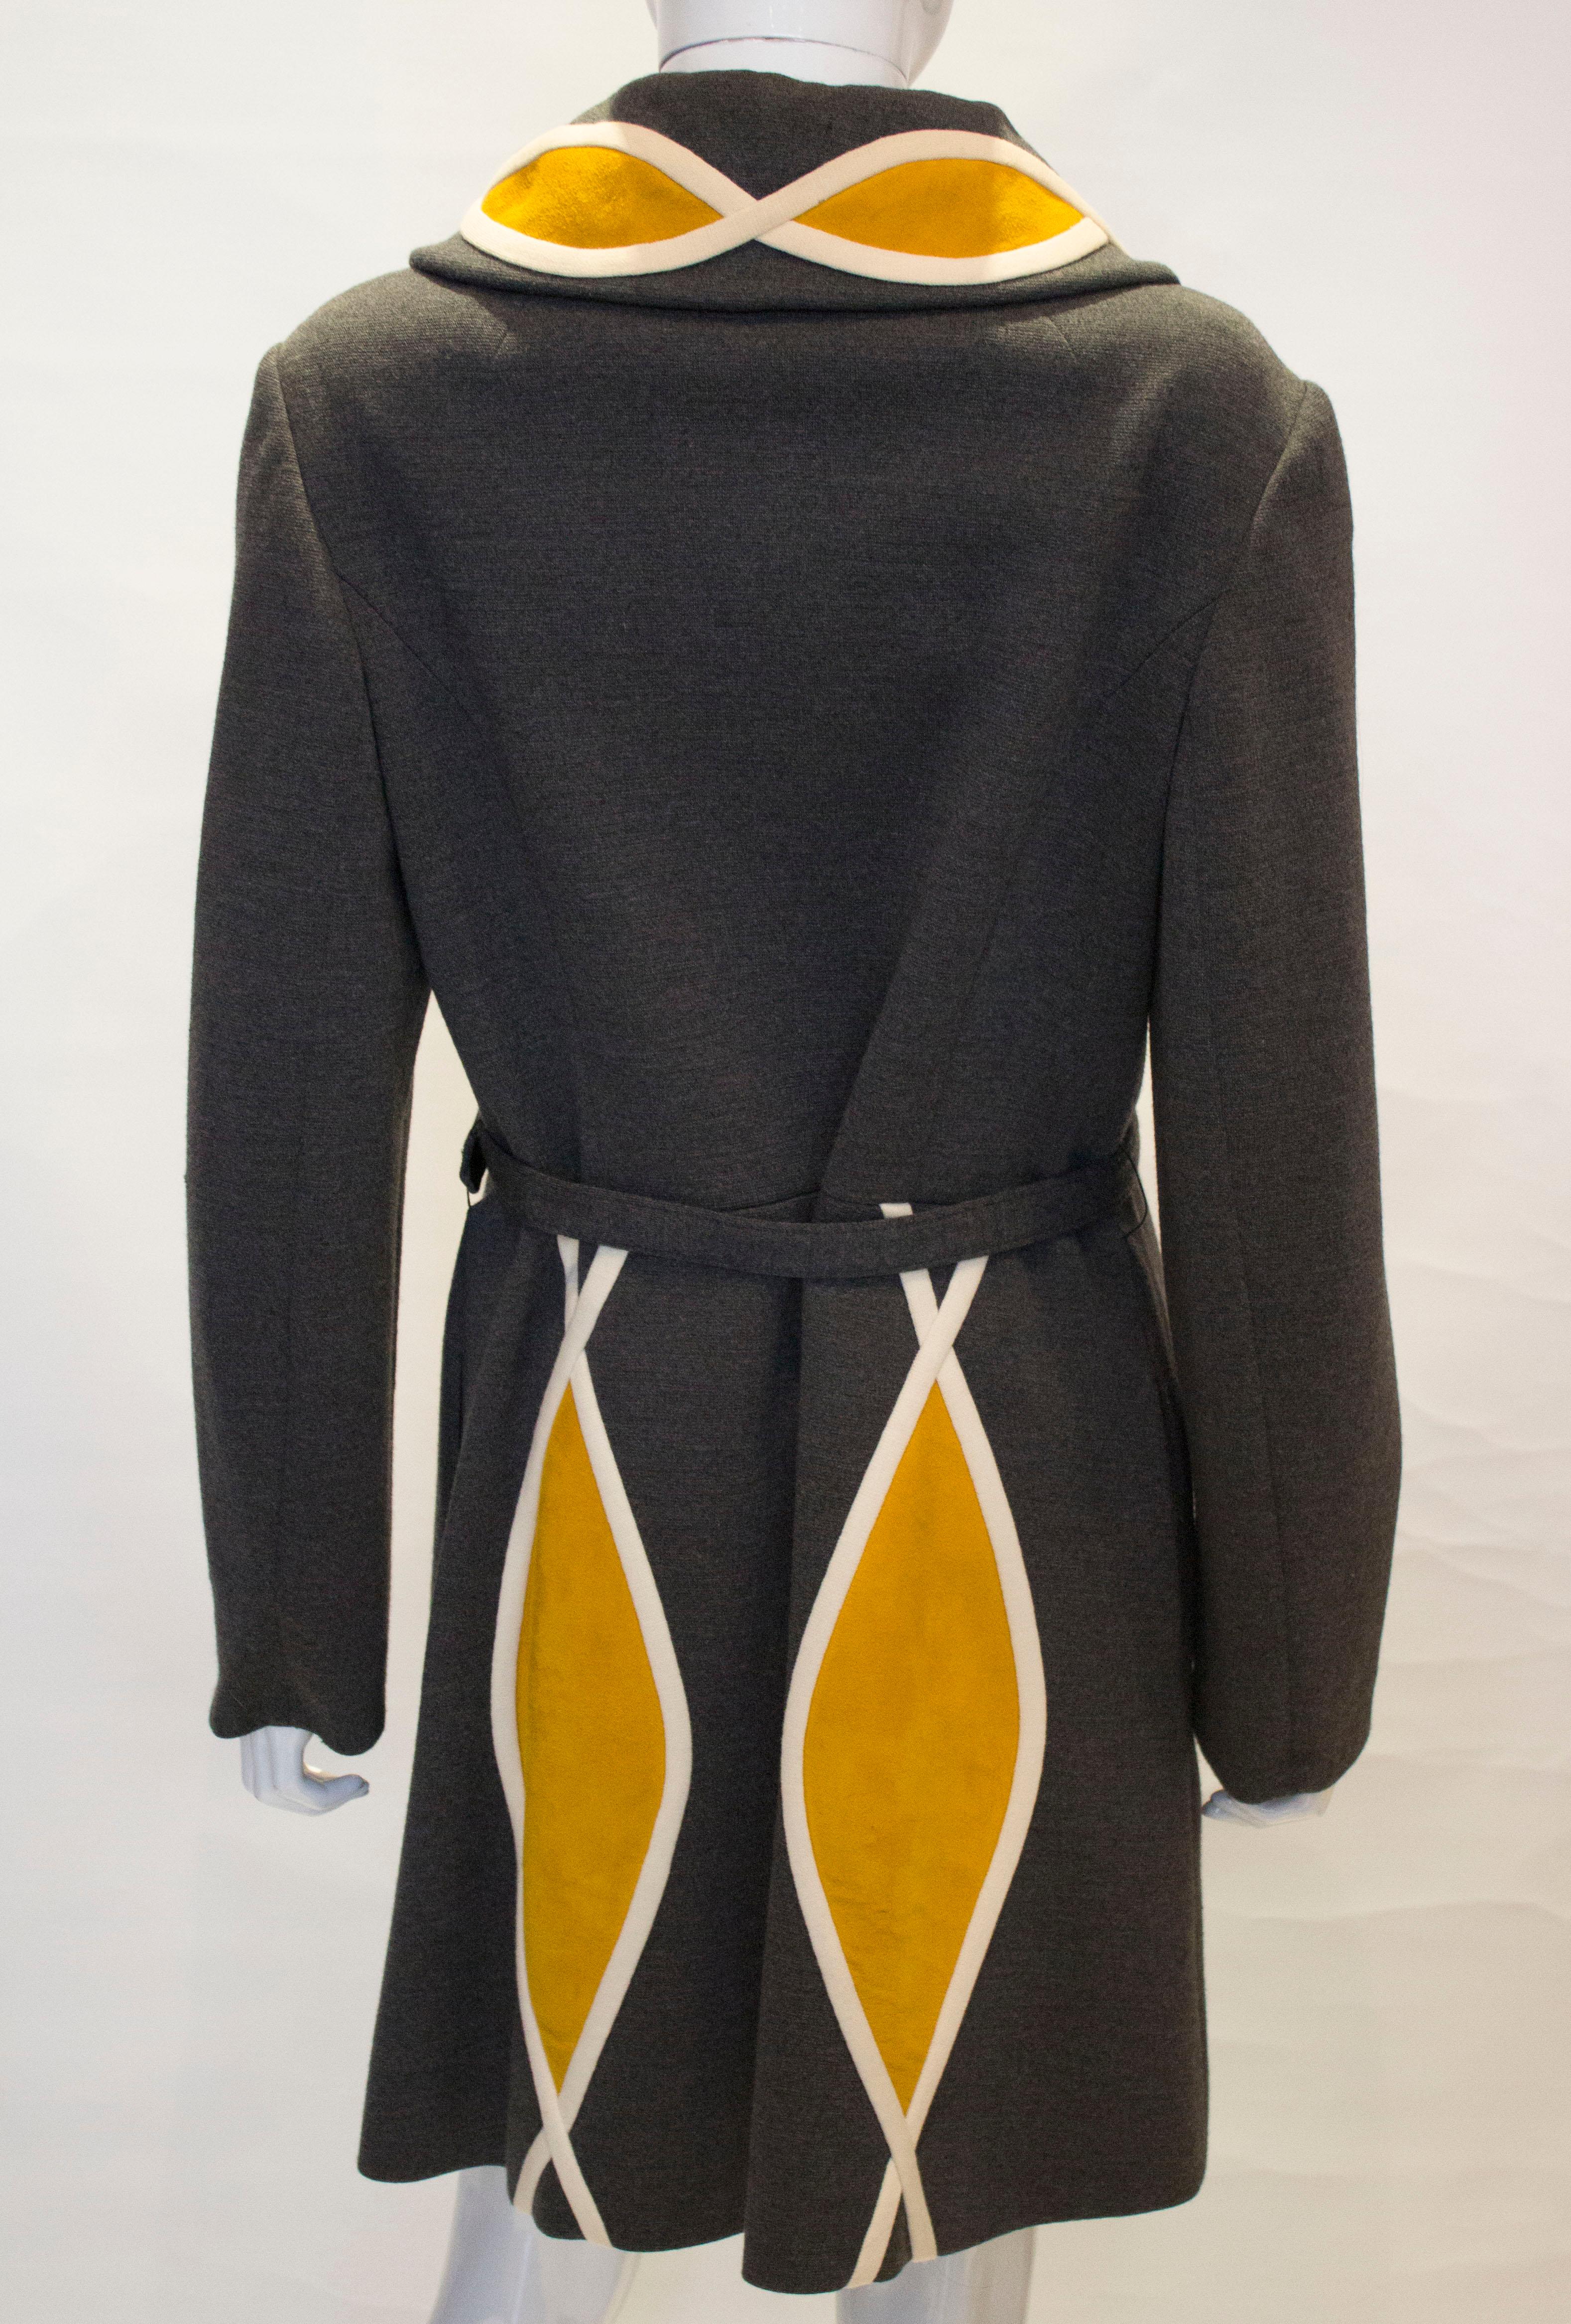 Vintage Lilli Ann Knit Jersey Dress and Matching Coat 11